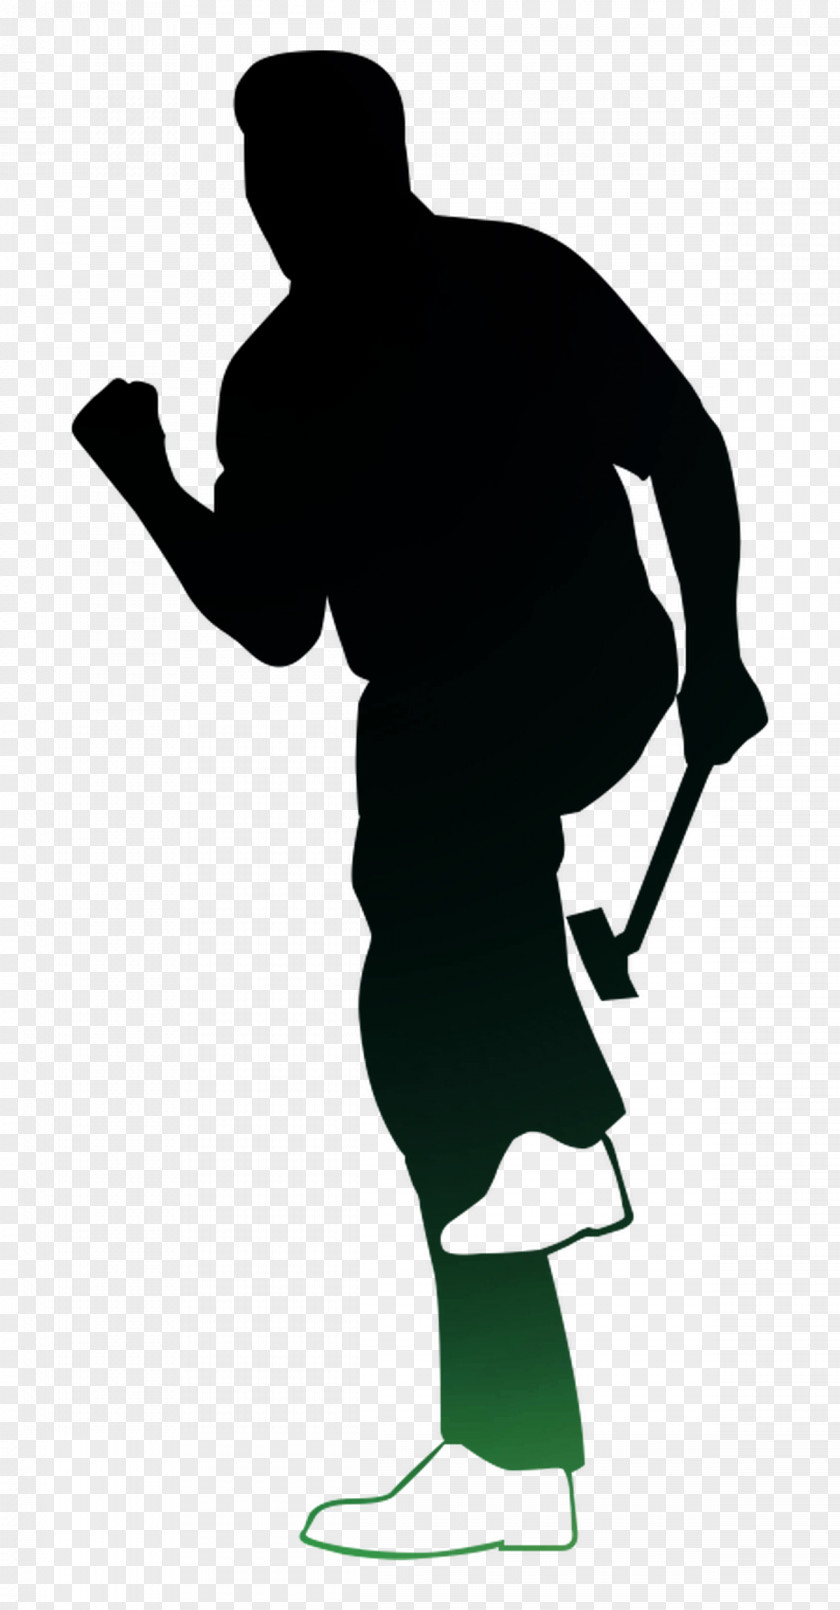 Golf Stroke Mechanics Silhouette Clubs Clip Art PNG